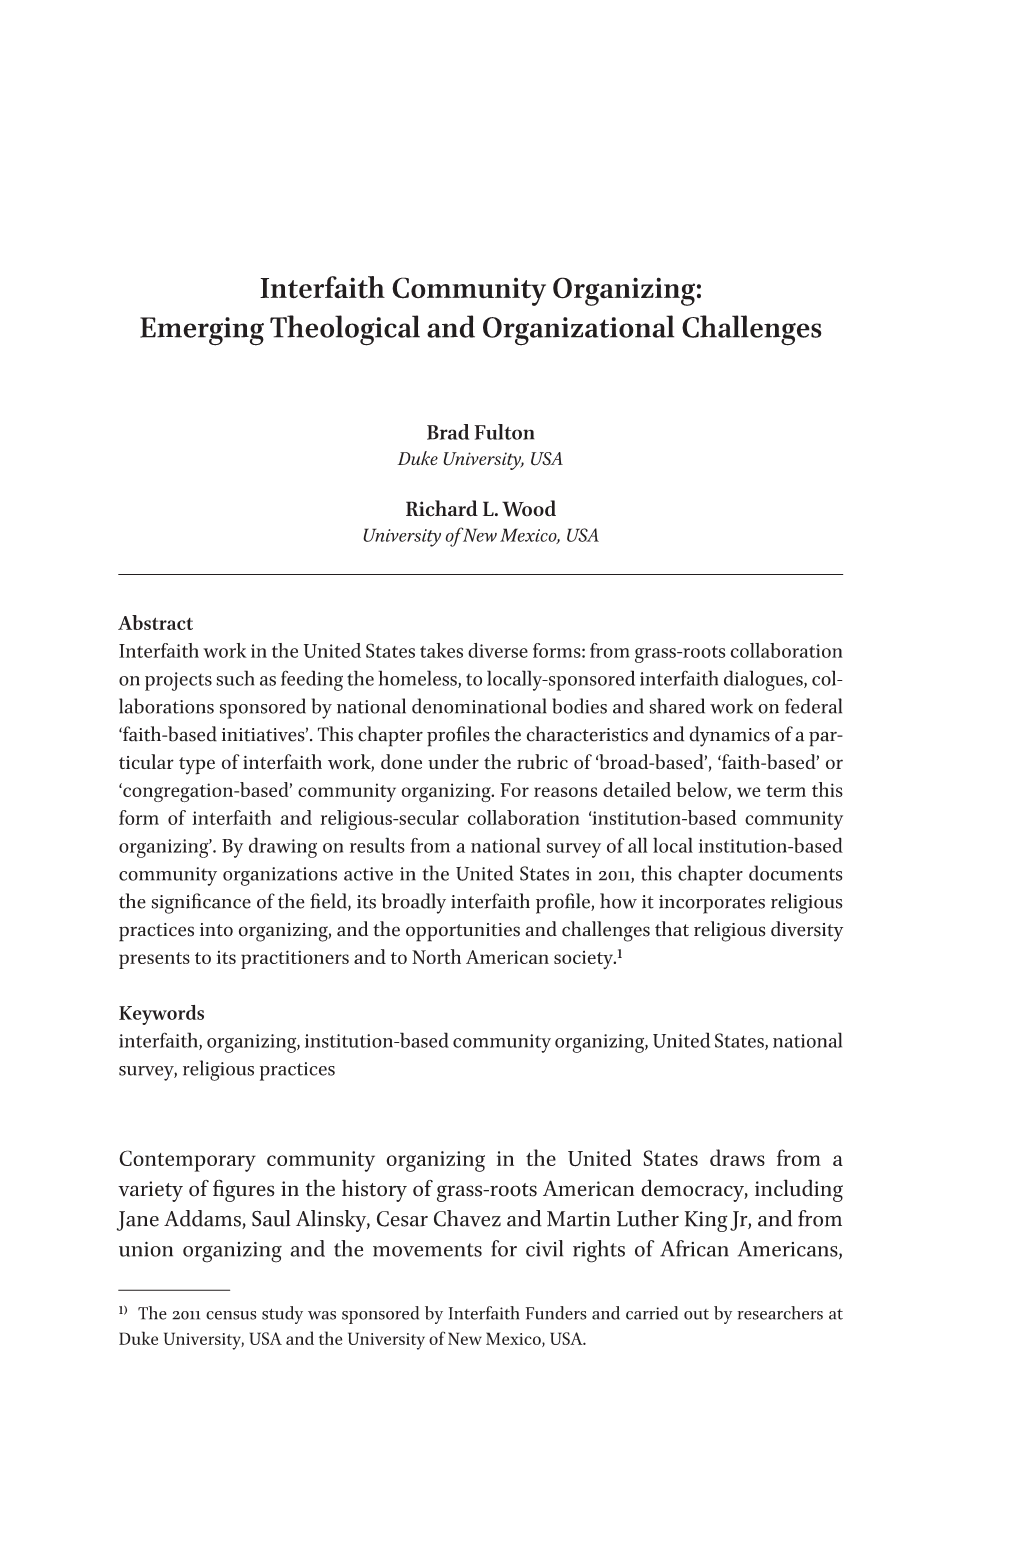 Interfaith Community Organizing: Emerging Theological and Organizational Challenges